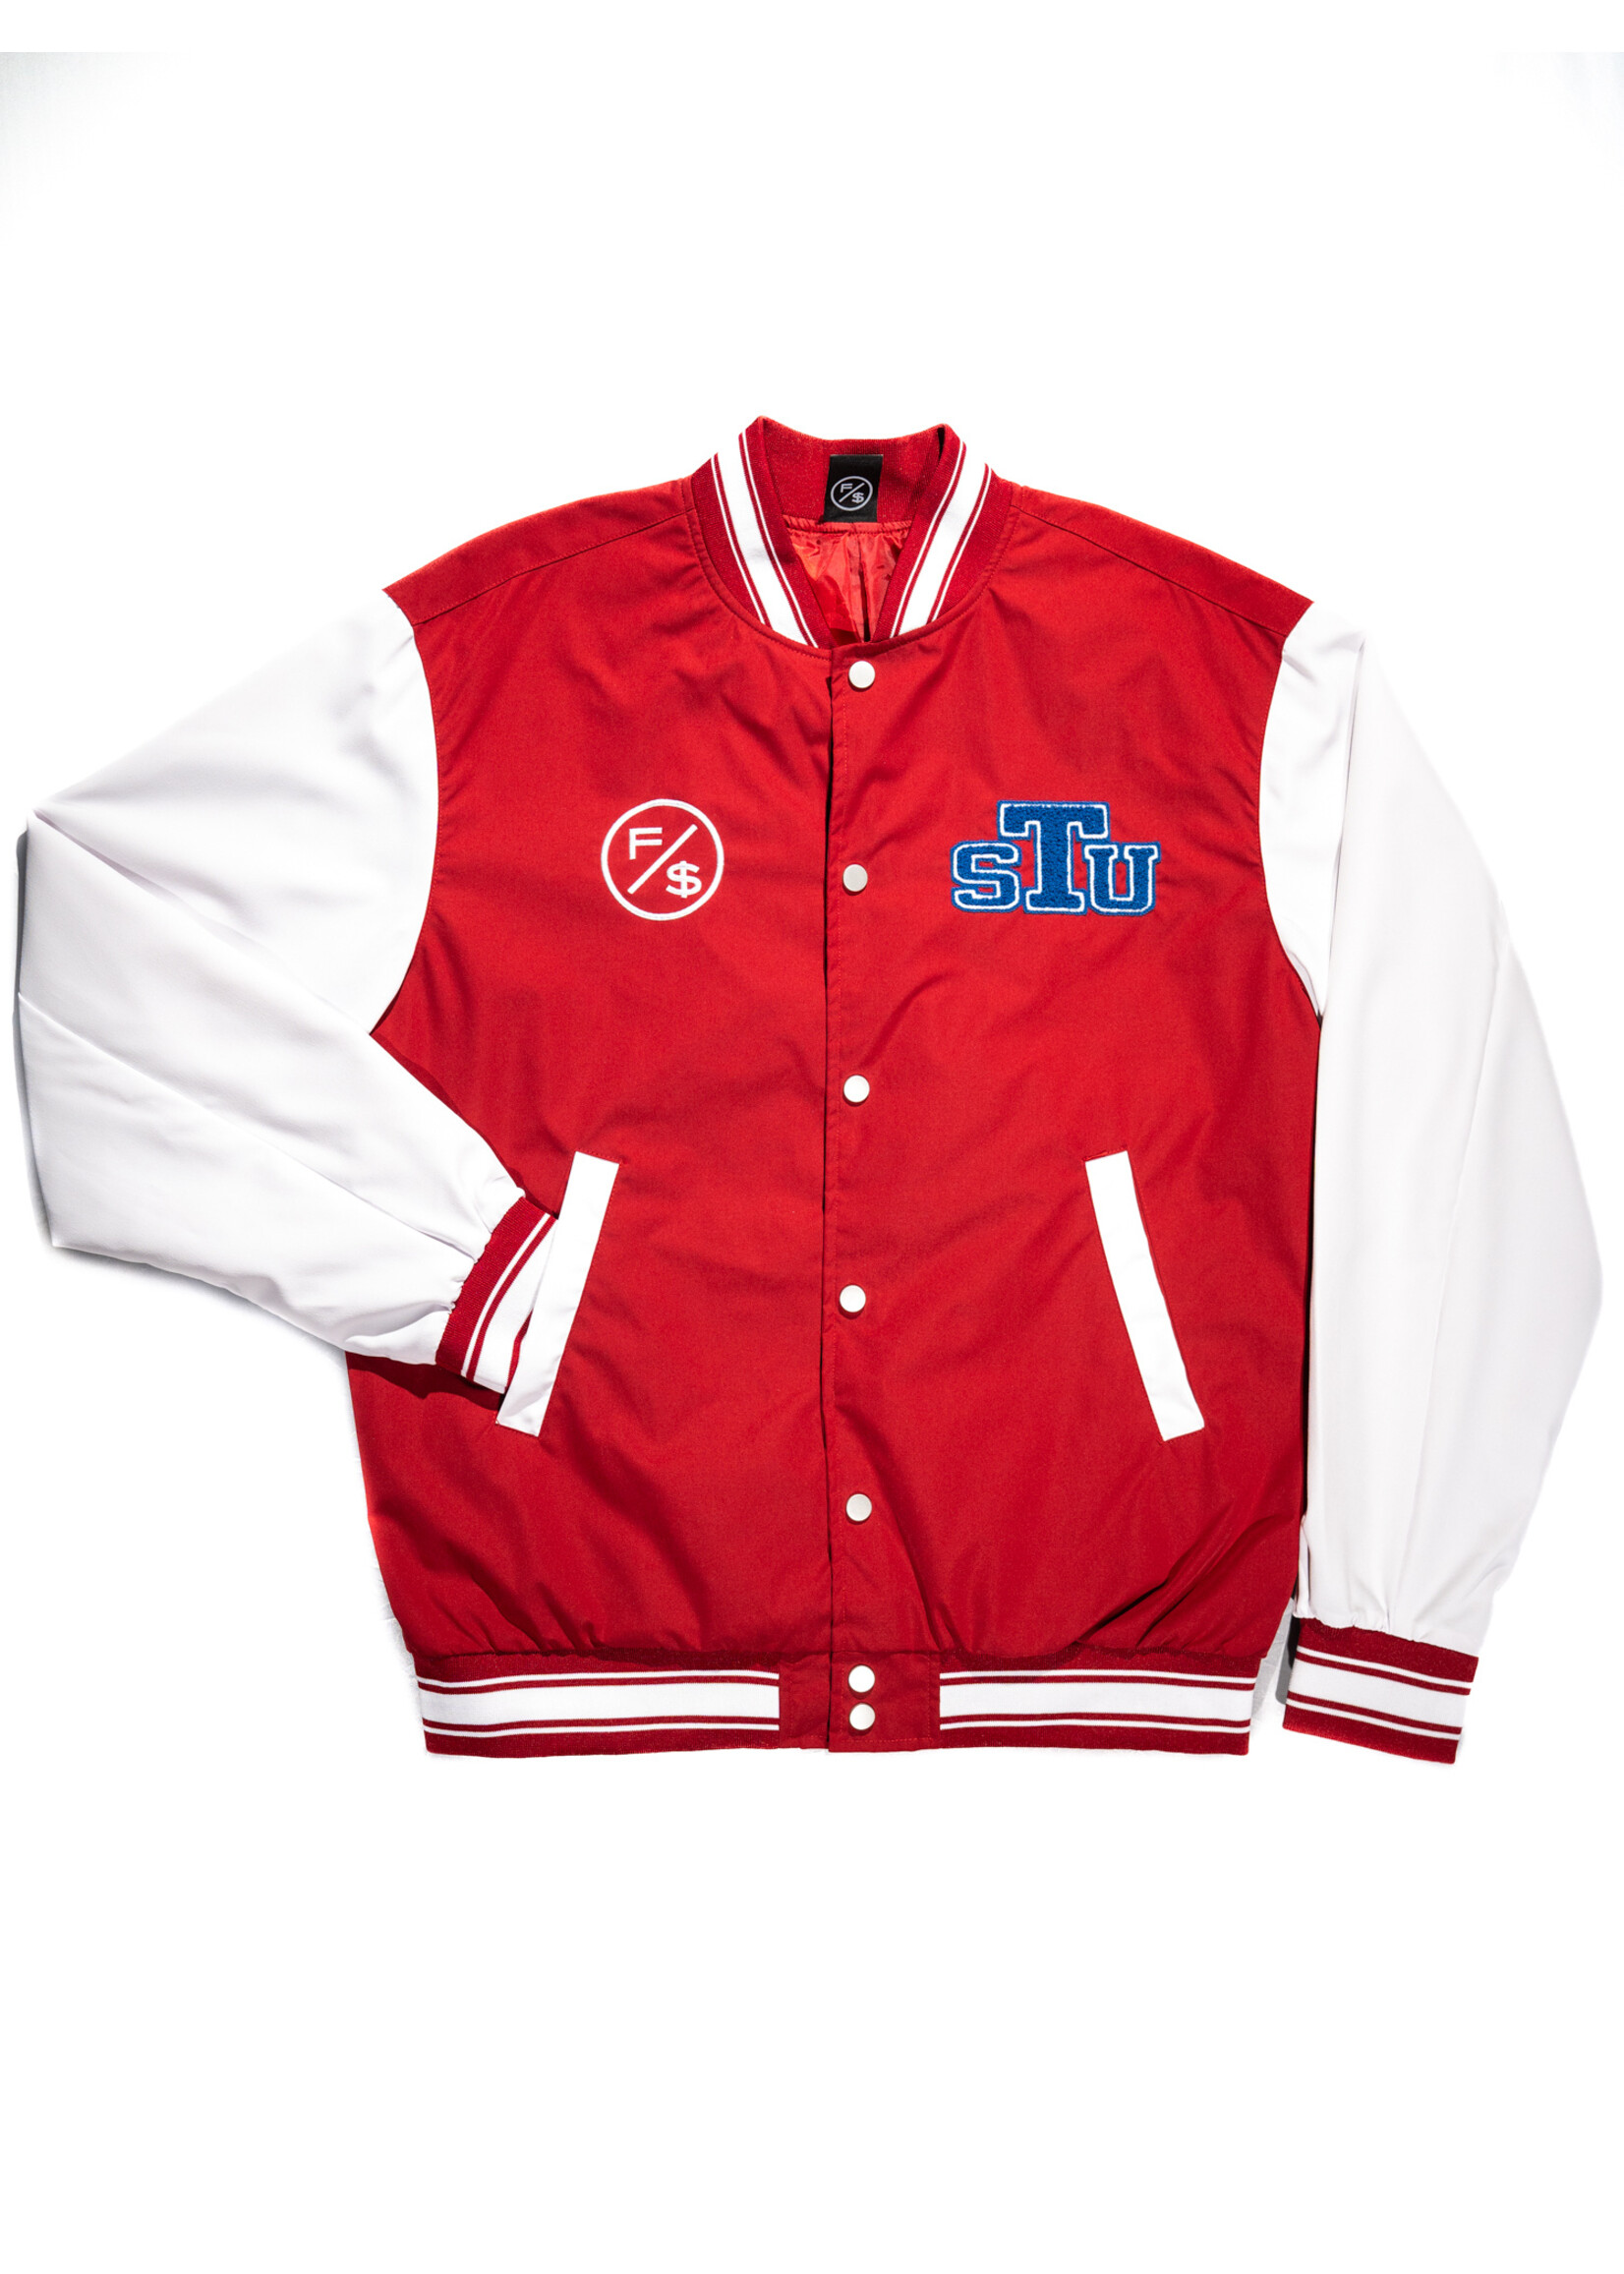 STU-FS Red Letterman Jacket